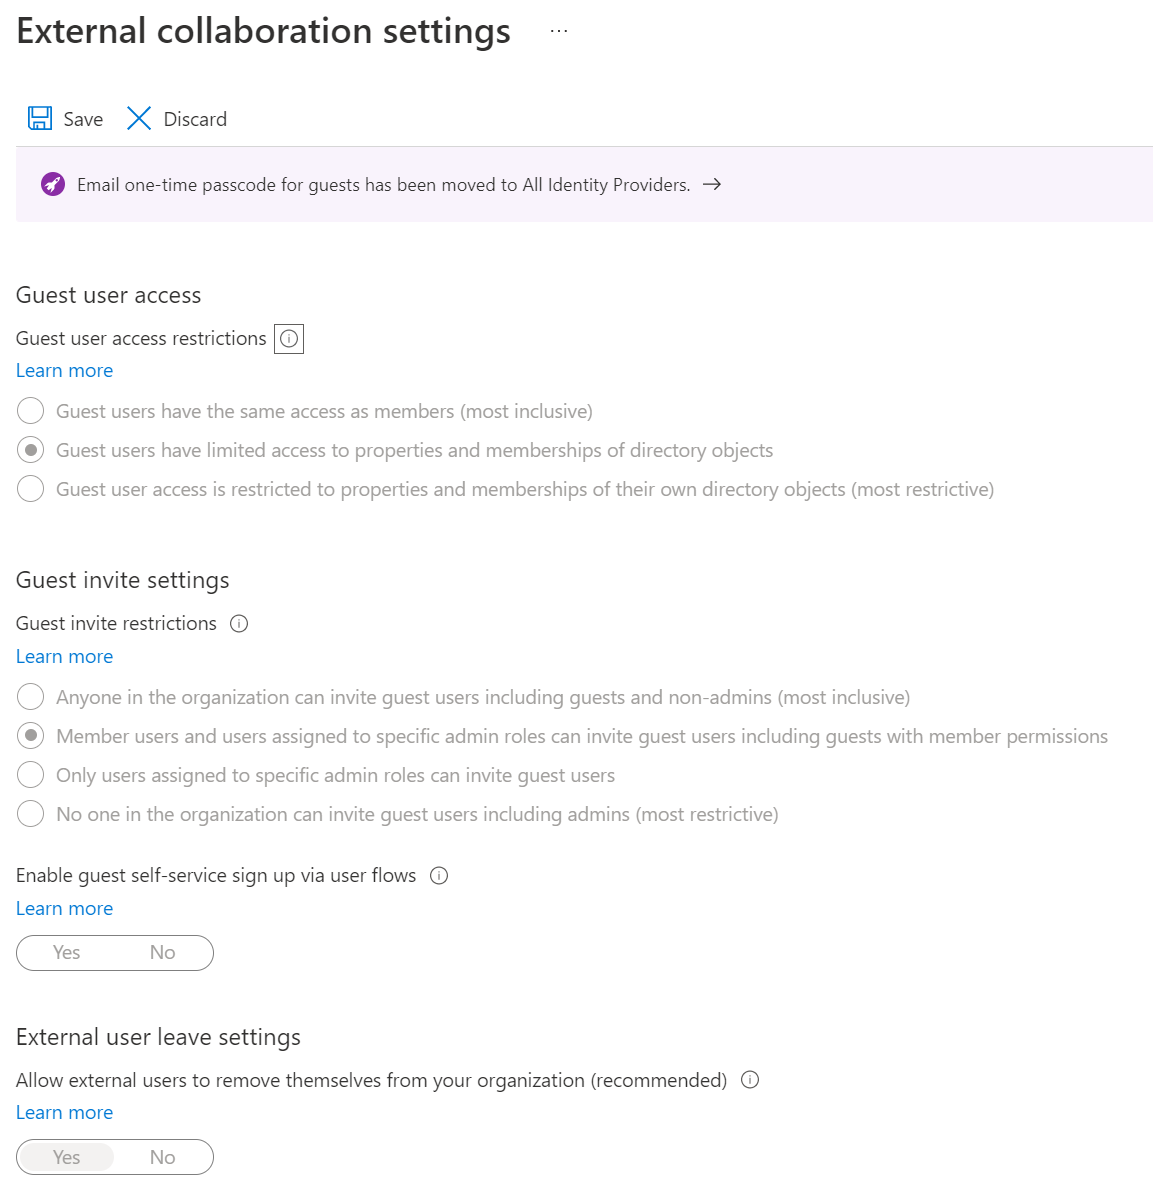 External collaboration settings